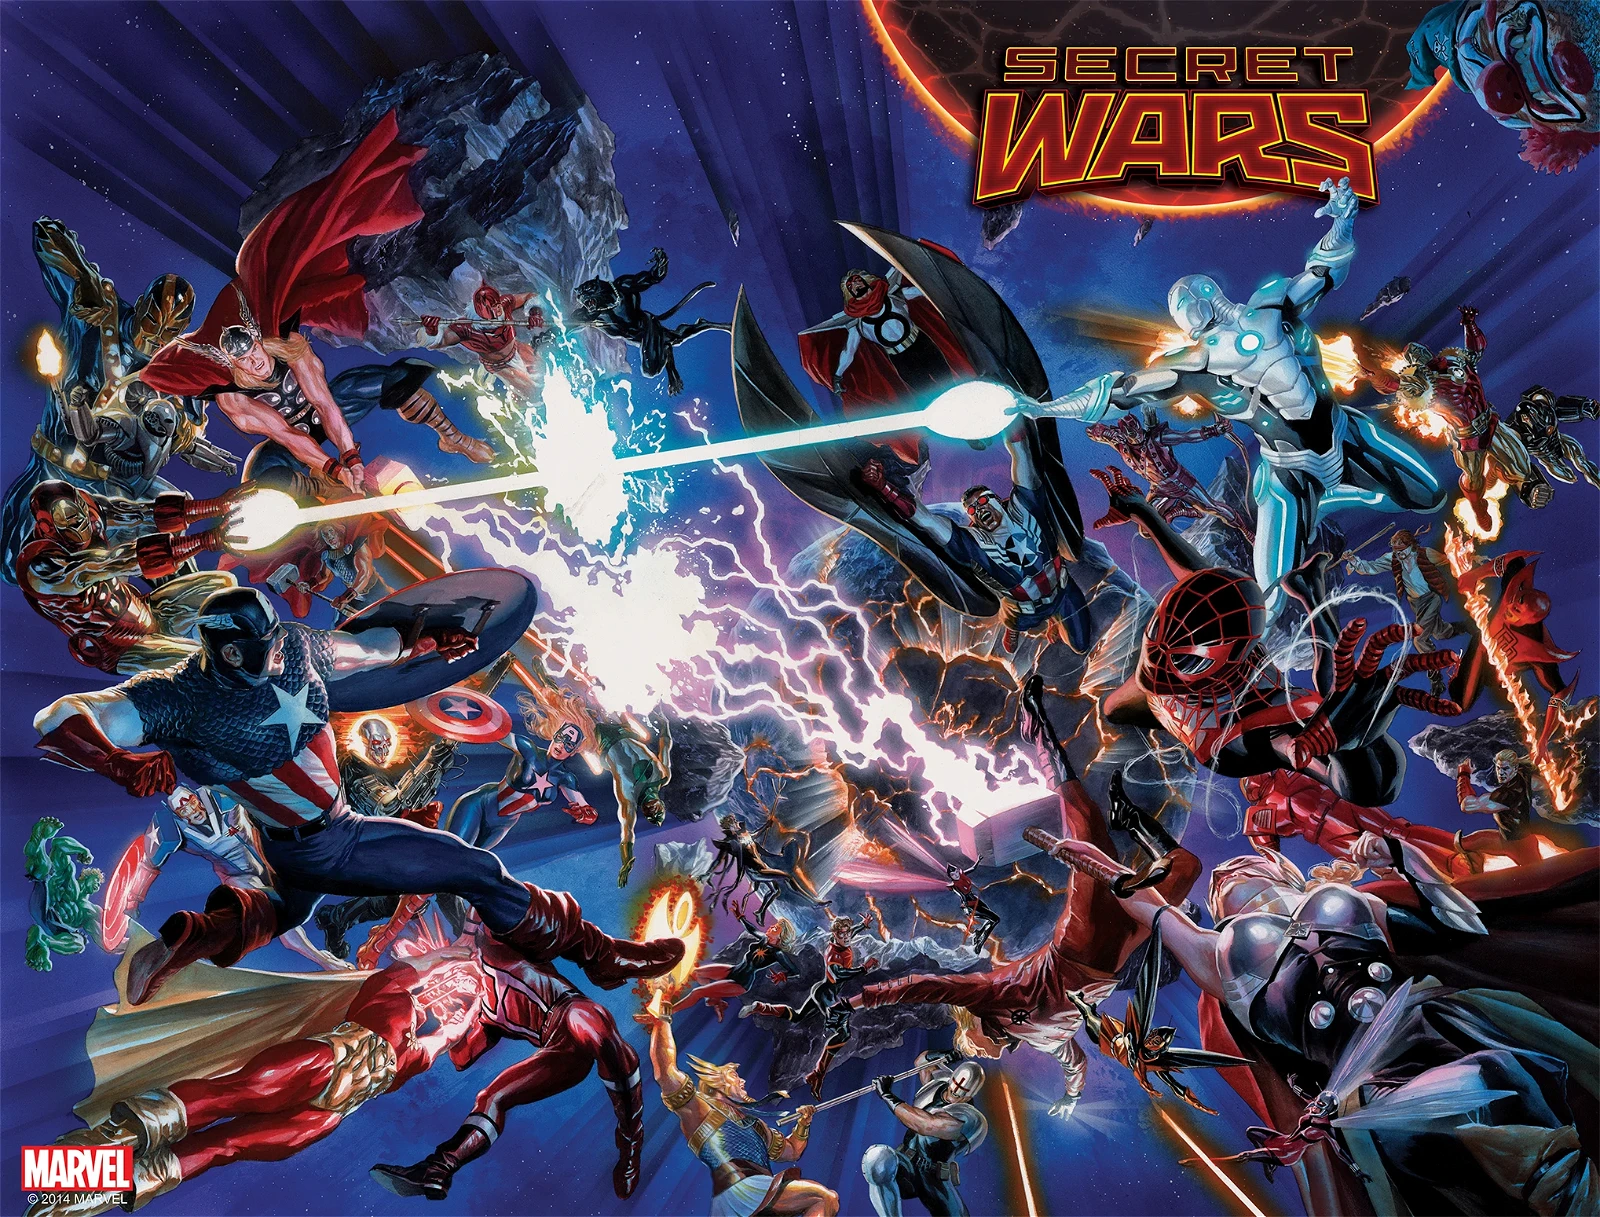 A comic panel showing the war in Avengers: Secret Wars.